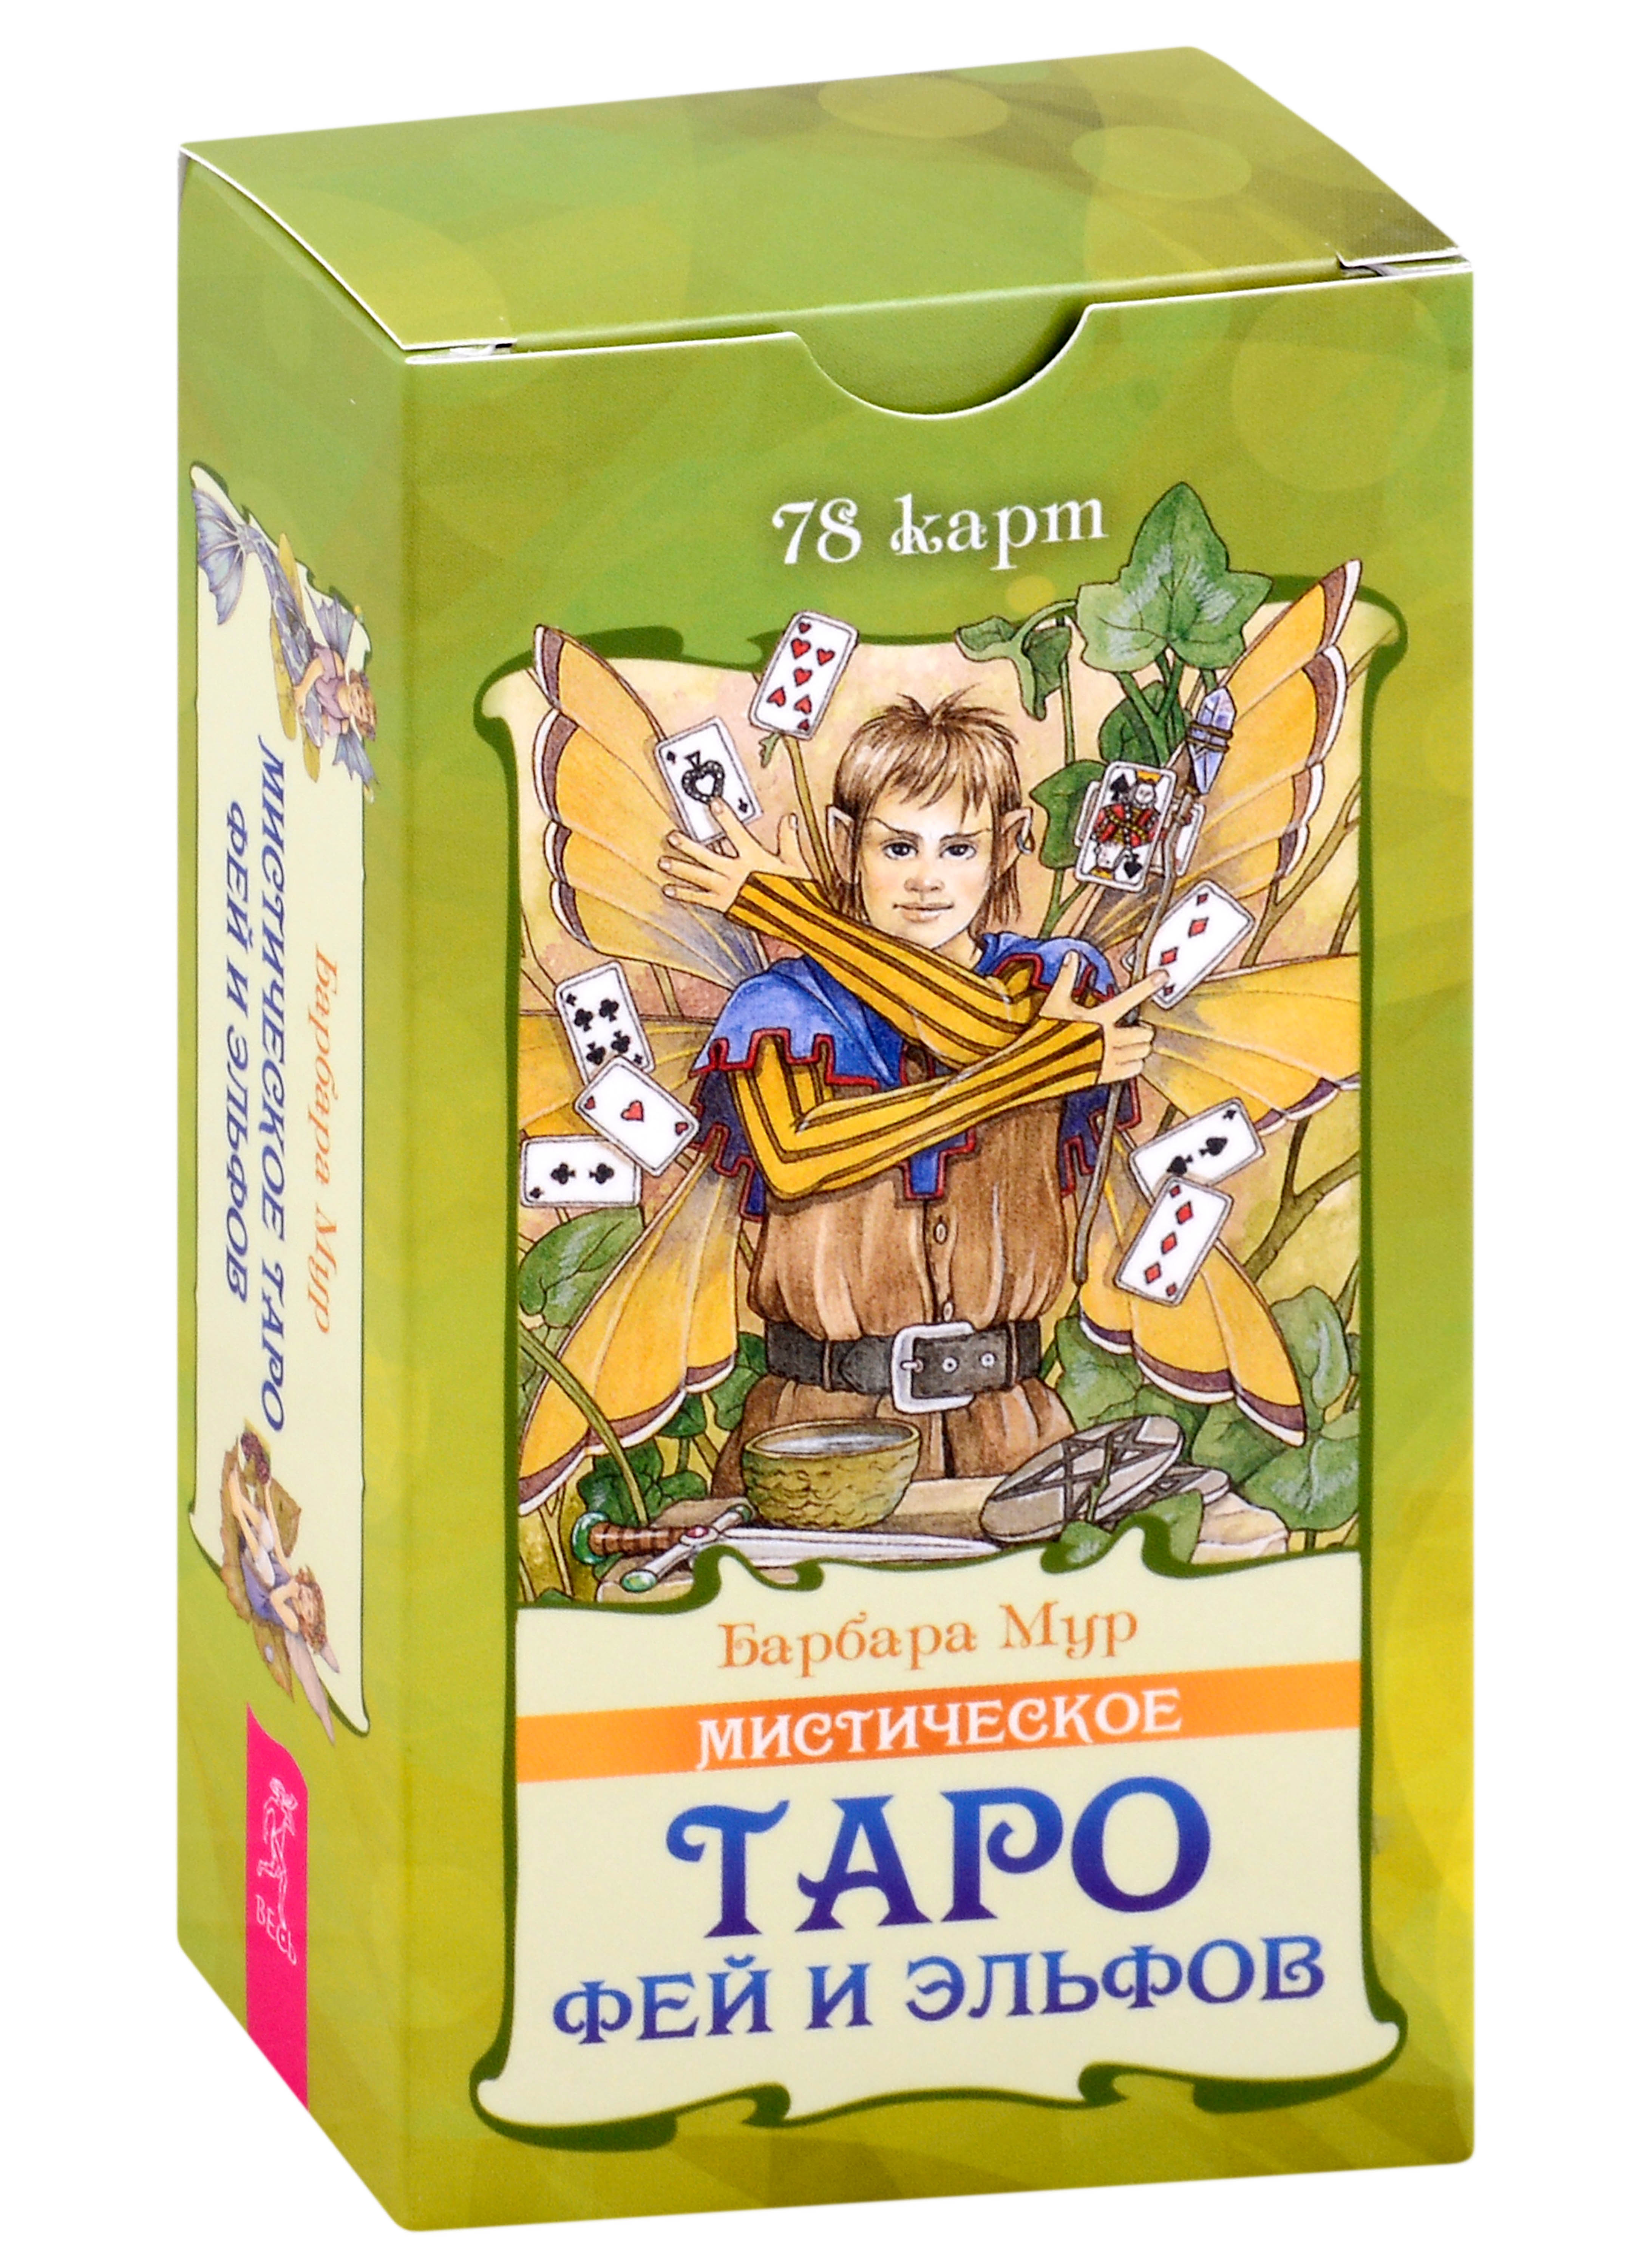 Мистическое Таро фей и эльфов (78 карт) (5015) costa guillano таро мистическое руководство и карты